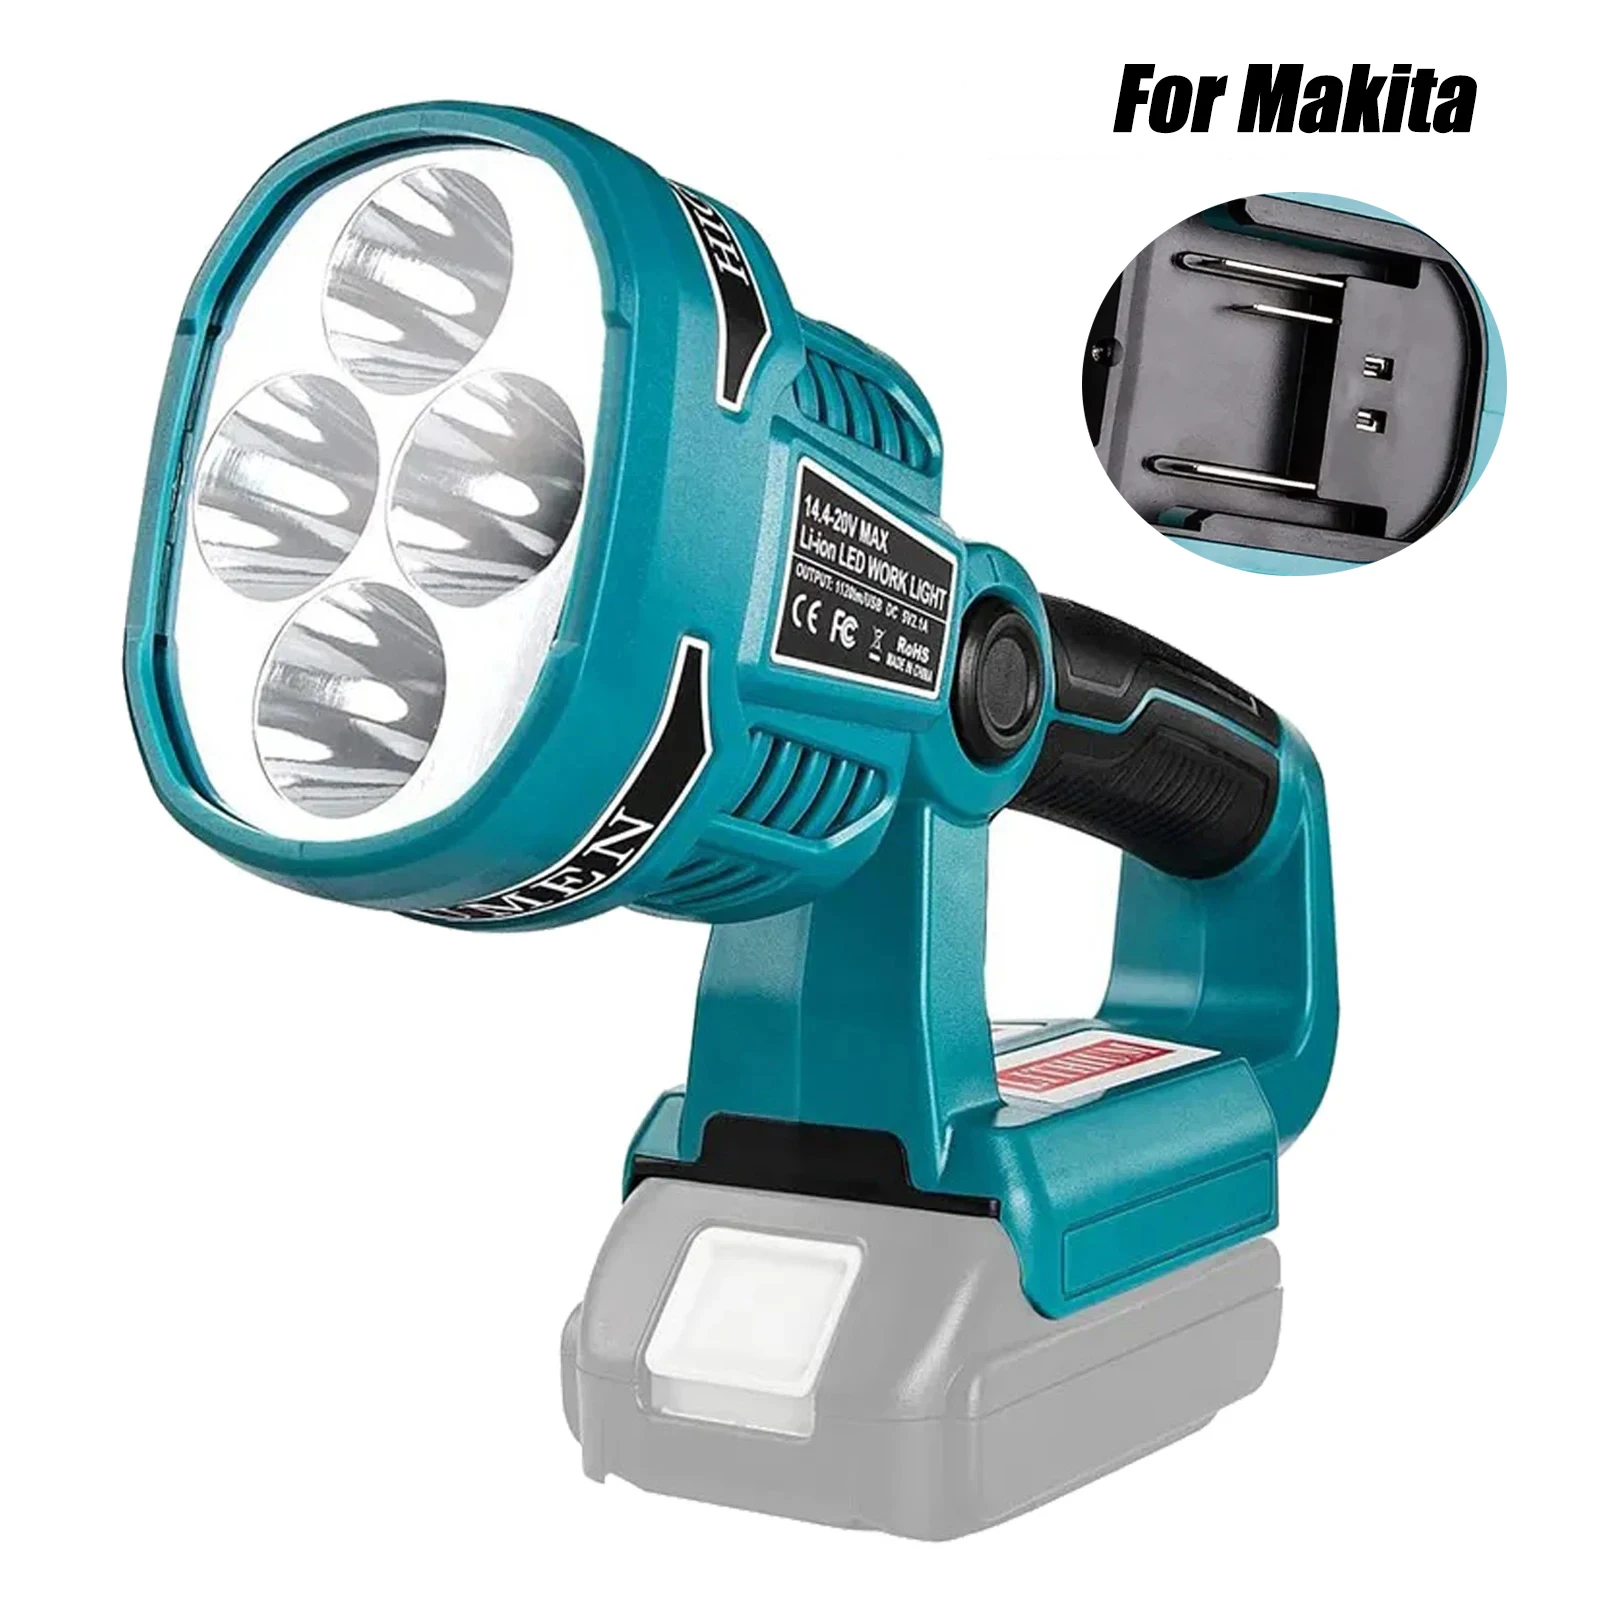 

9inch 12W 1120LM Emergency LED Work Light for Makita 14.4V-20V Li-ion Battery Super Bright Portable Handheld Flashlight